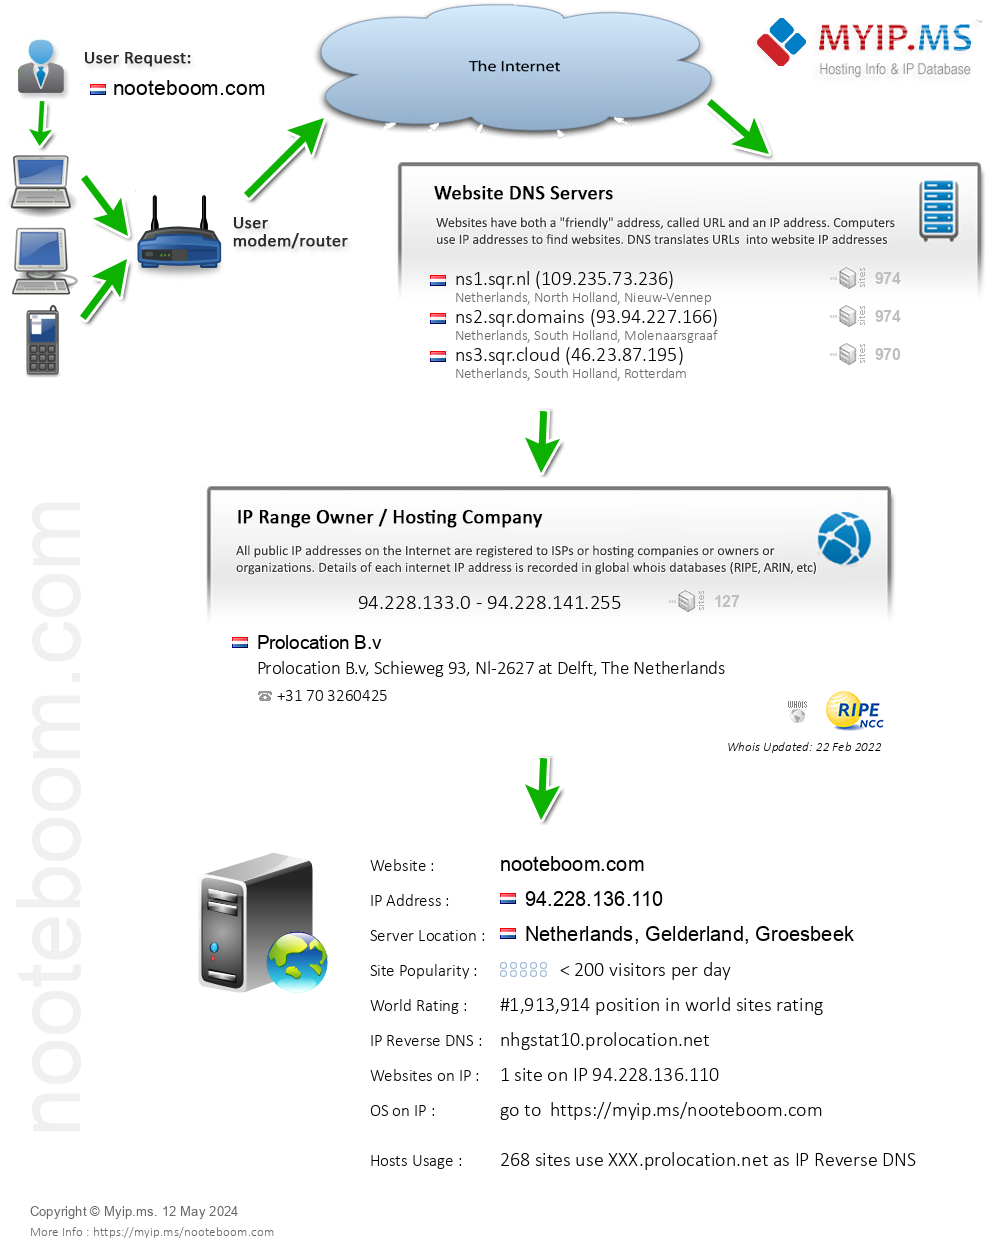 Nooteboom.com - Website Hosting Visual IP Diagram